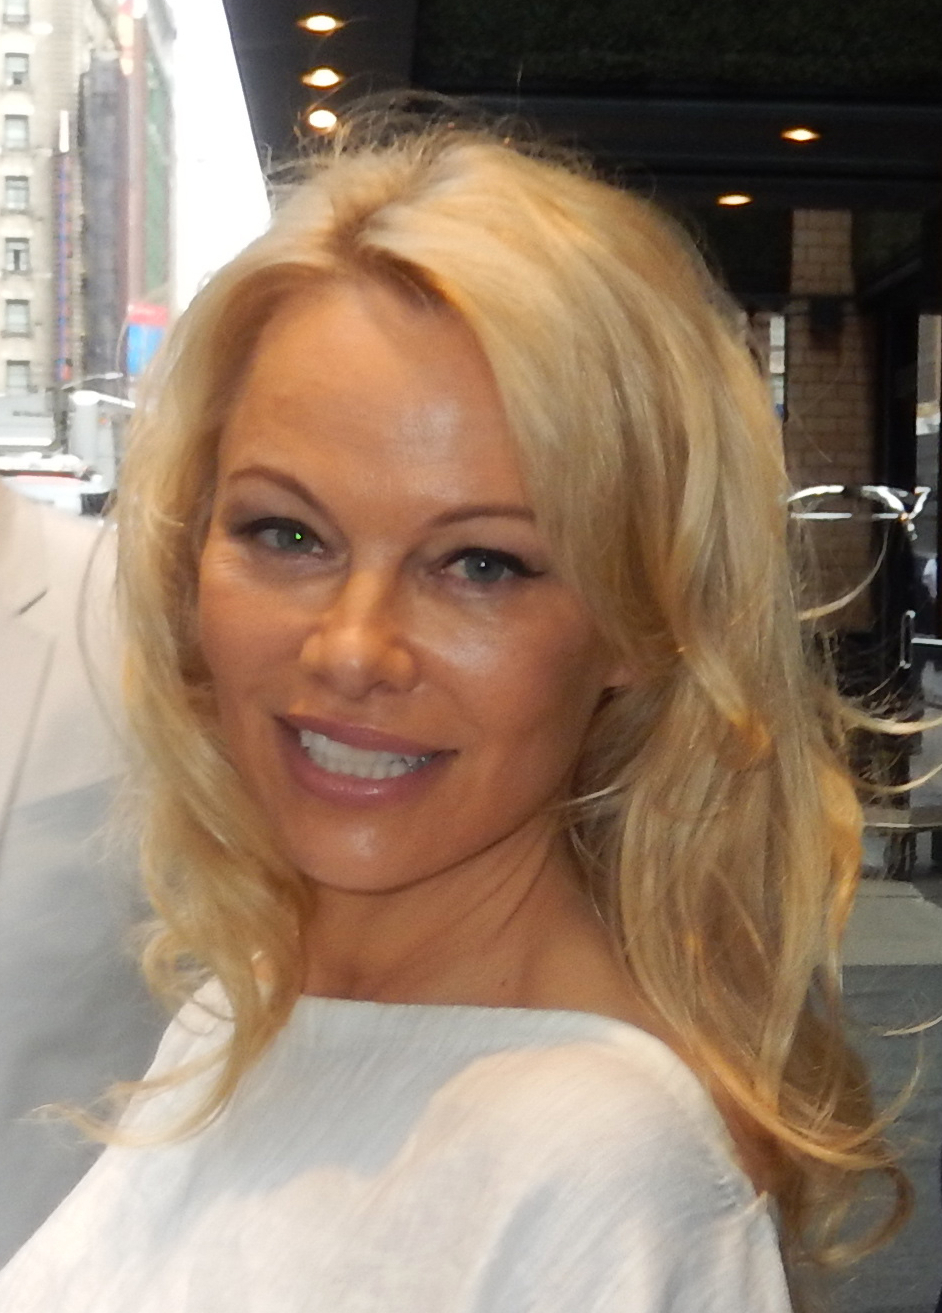 Pamela Anderson - Wikipedia